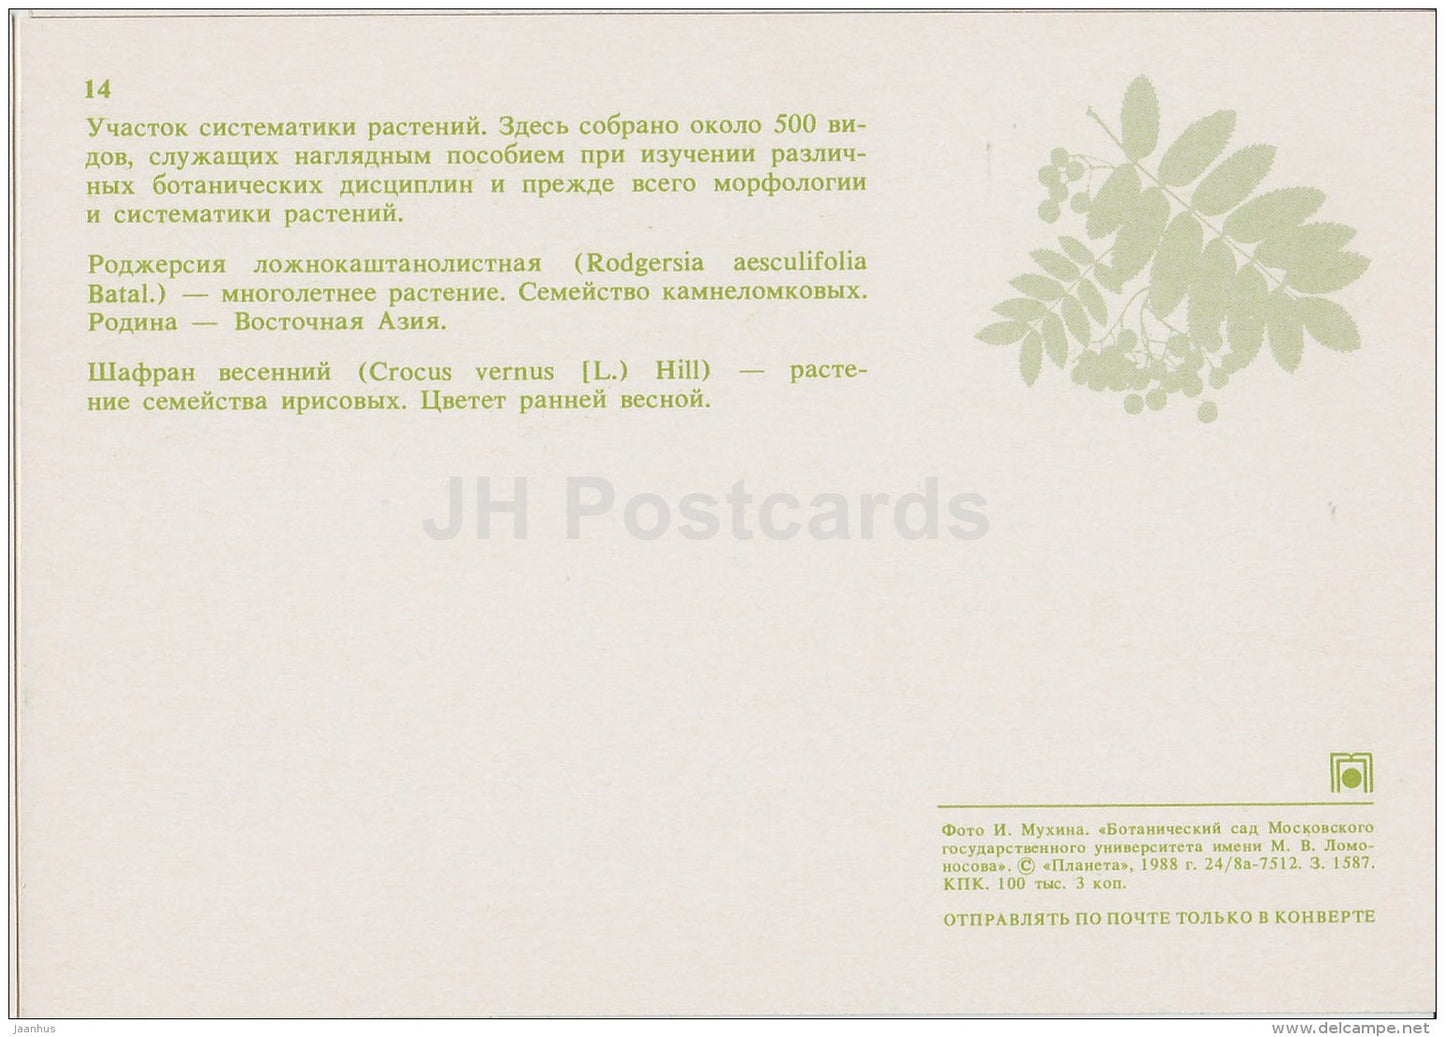 Rodgersia aesculifolia - Crocus vernus - Moscow Botanical Garden - 1988 - Russia USSR - unused - JH Postcards